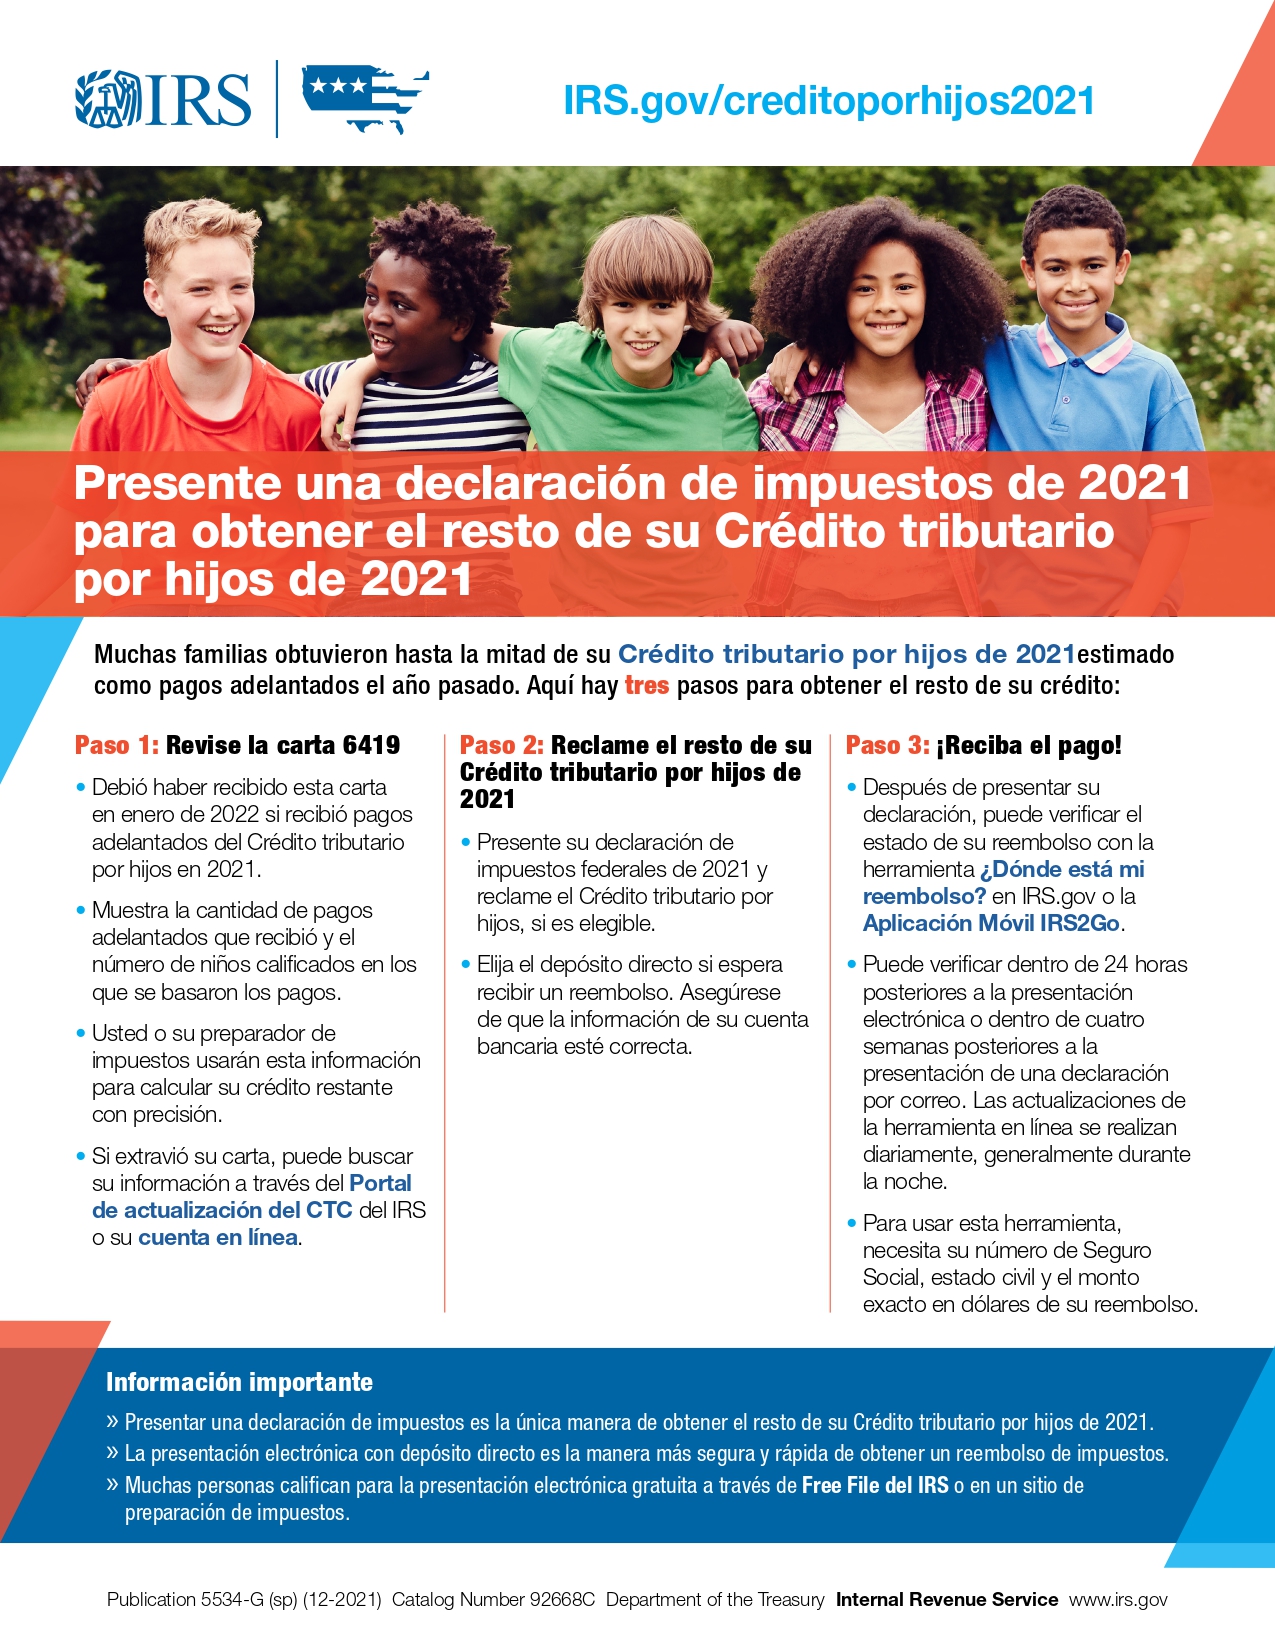 Child tax credit flyer spanish